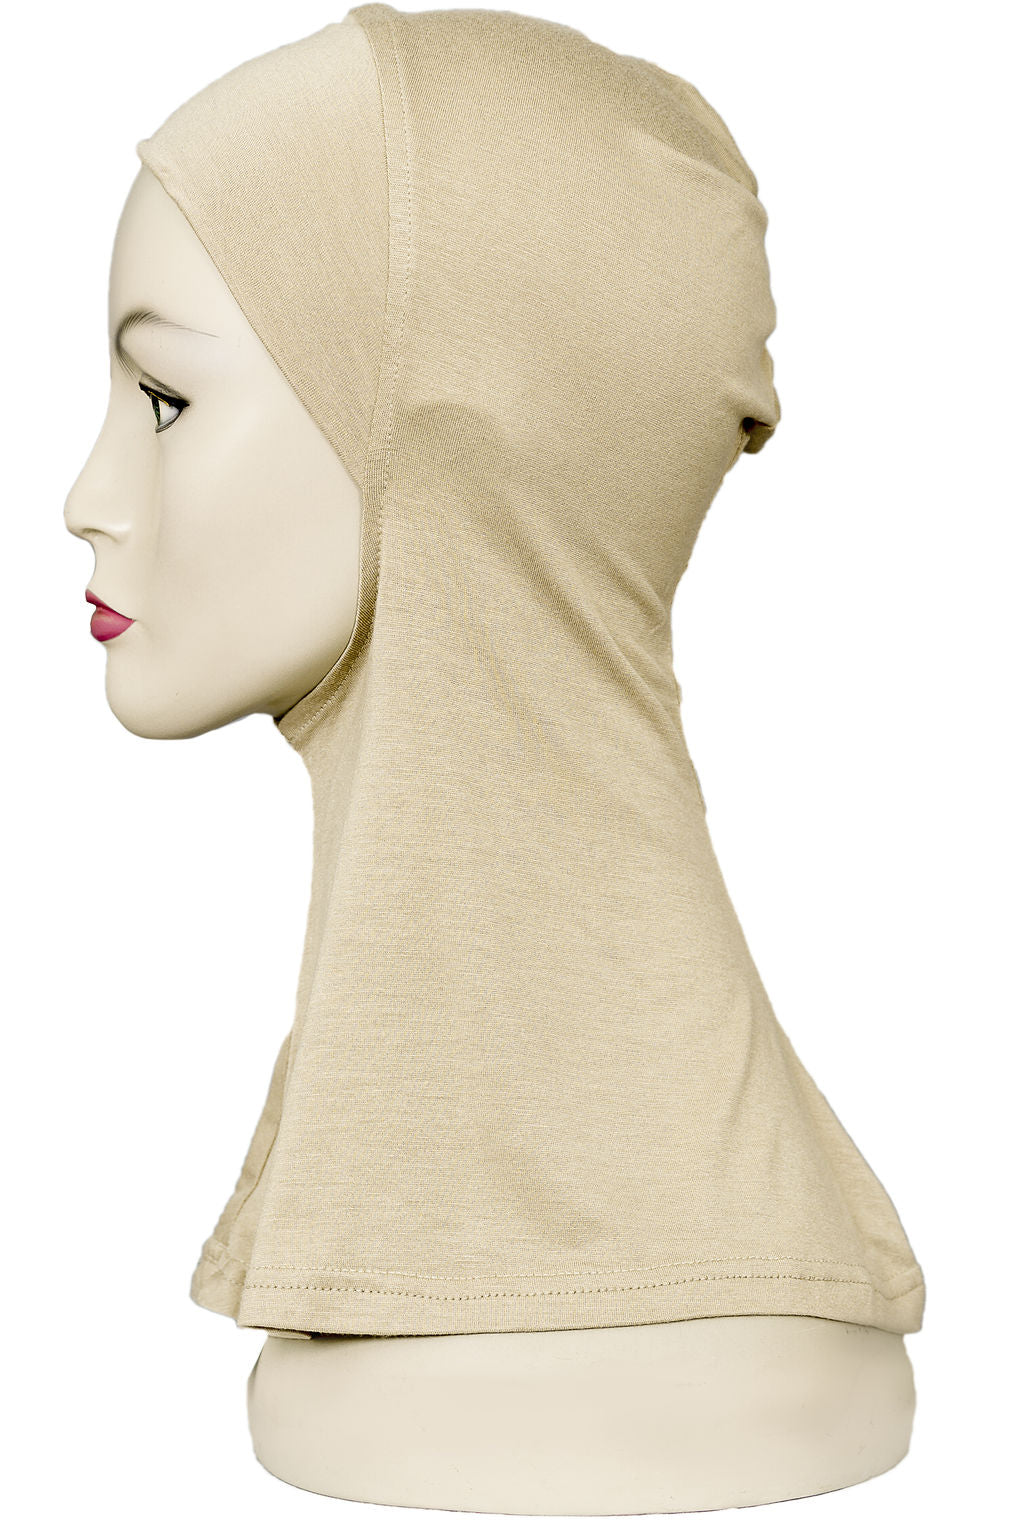 Ninja Cotton Cap in Creamy Gold - Behind The Veil